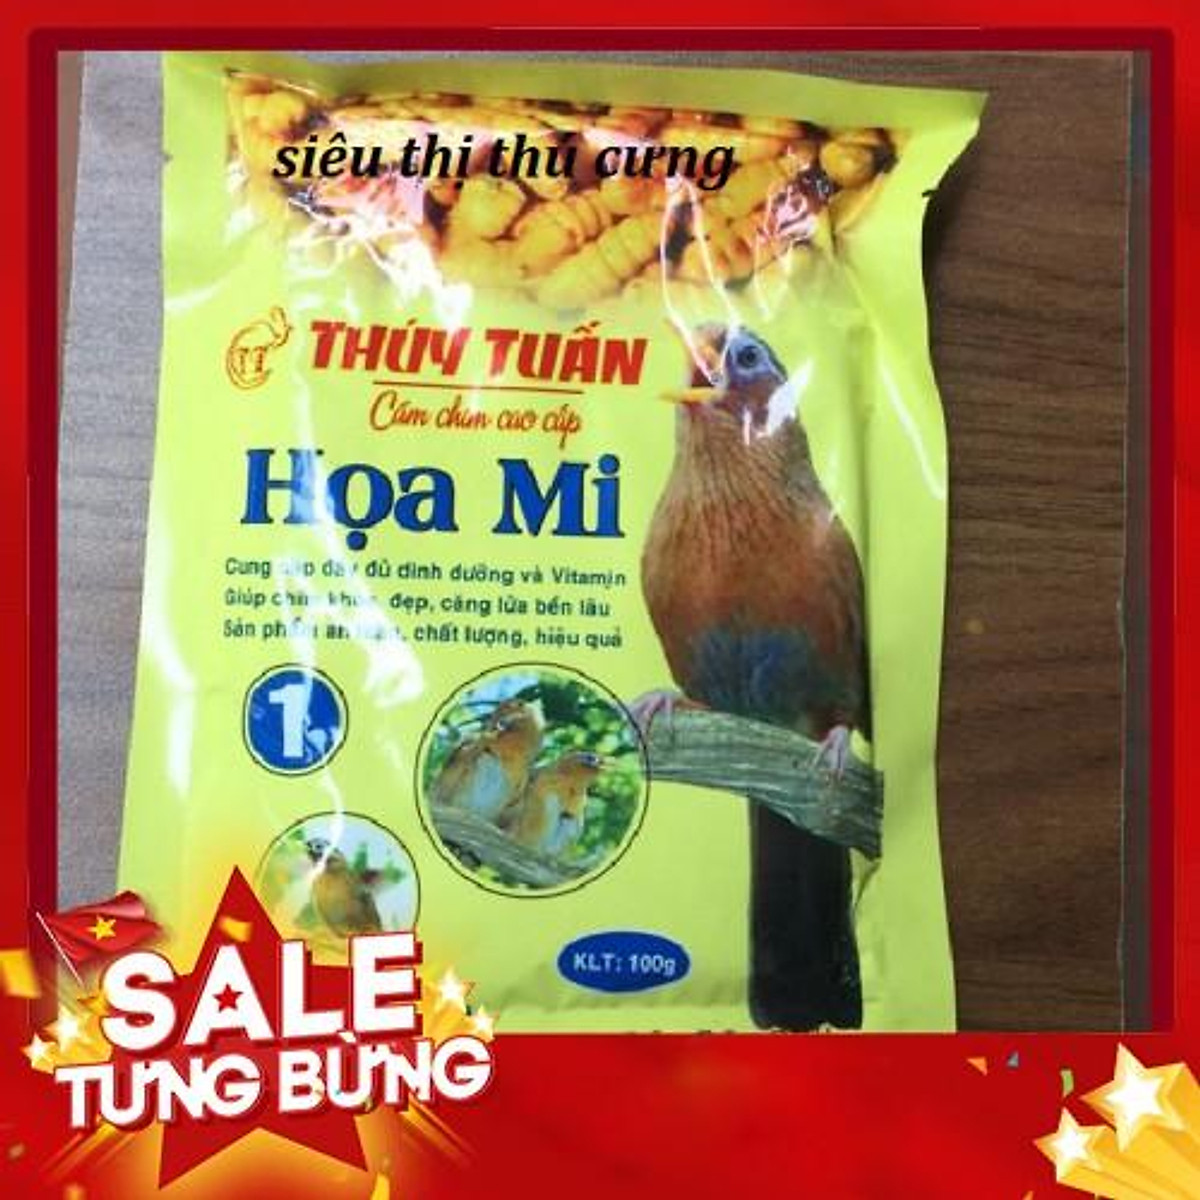 Cám họa mi hiển bảo khánh số 1, 2 (cám chim hoạ mi, cám khướu, cám tiểu mi  - dưỡng, căng lửa) | Shopee Việt Nam